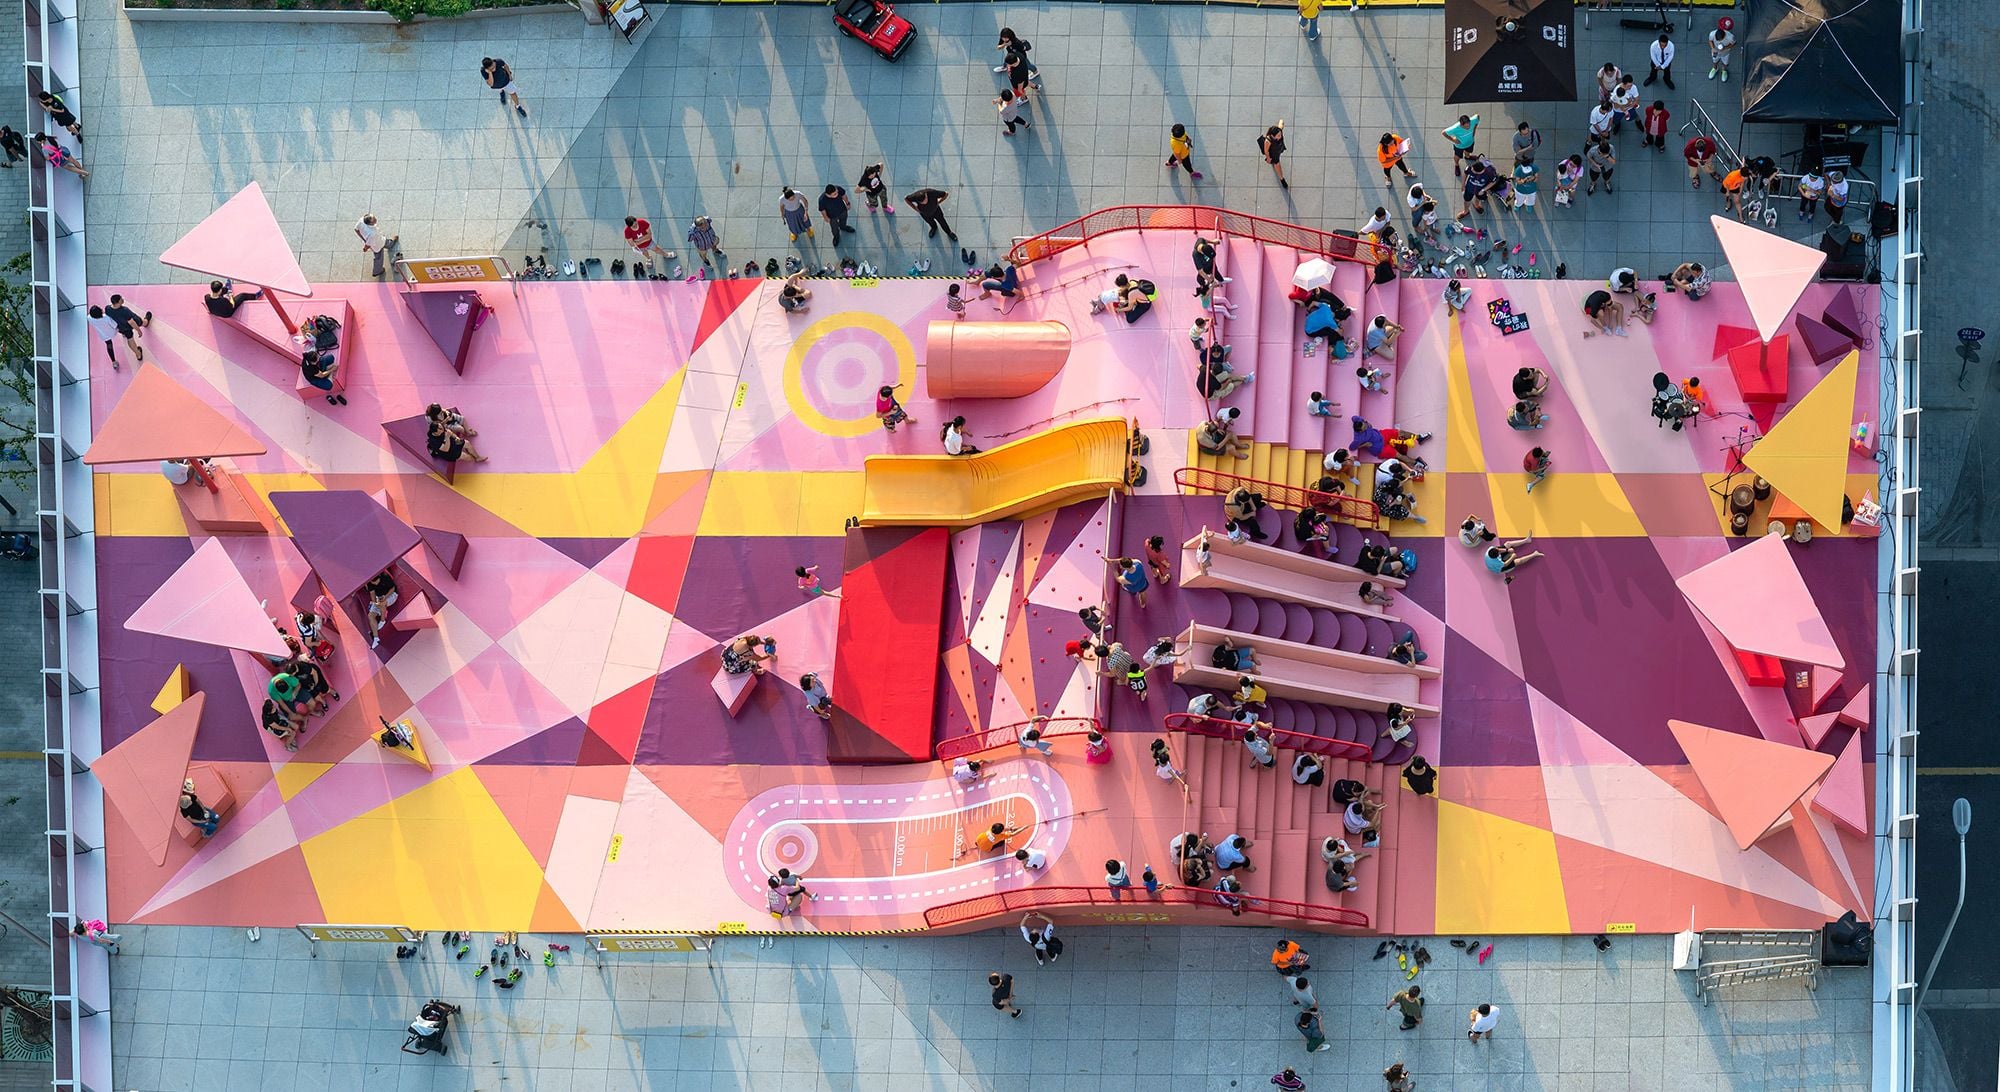 100 Architects' Big Bang Playground in Shanghai 